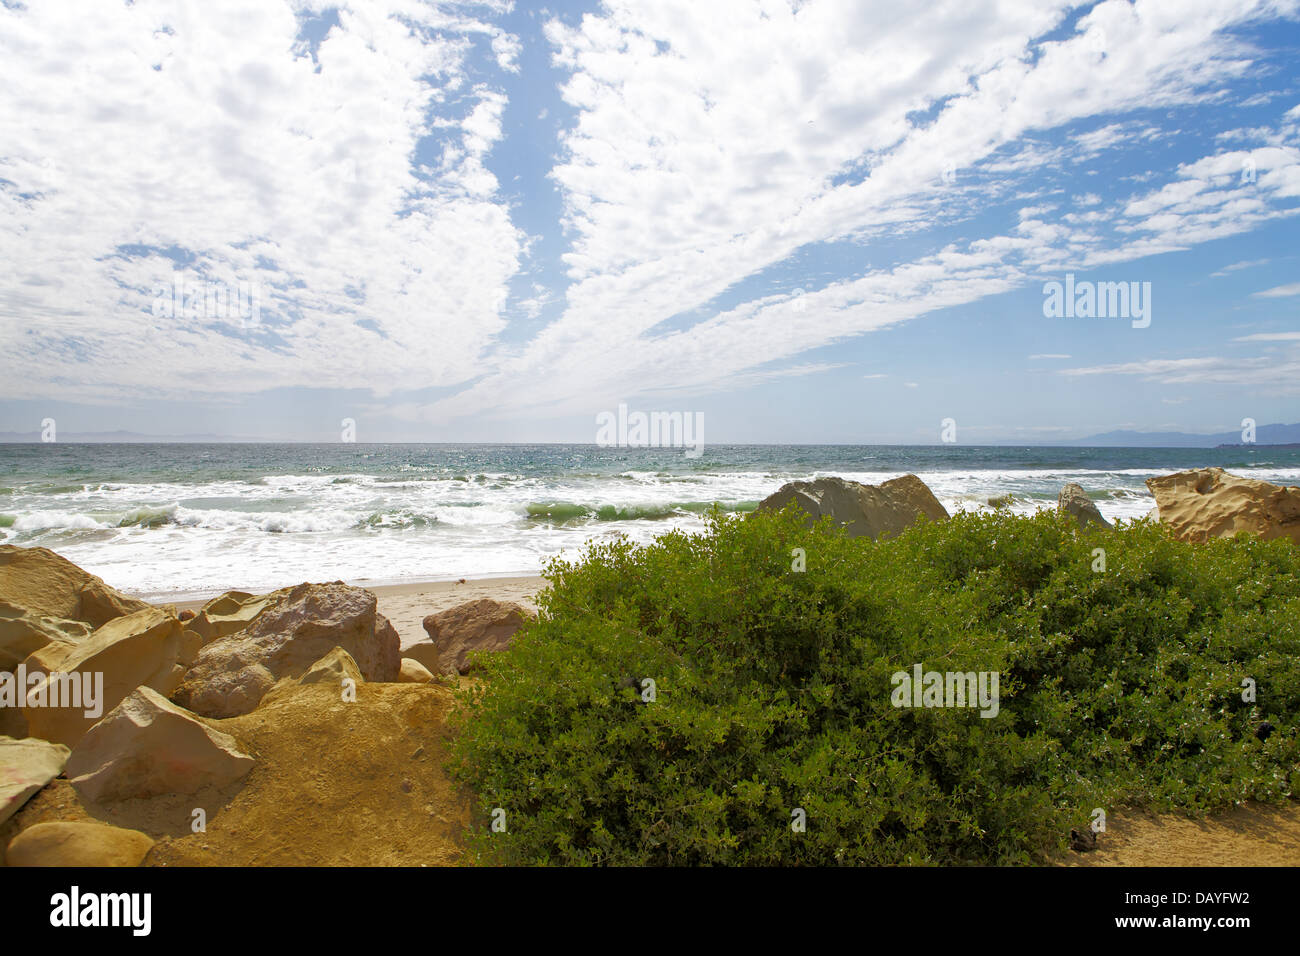 The Pacific coast and the beach in Ventura, California, United States Stock Photo